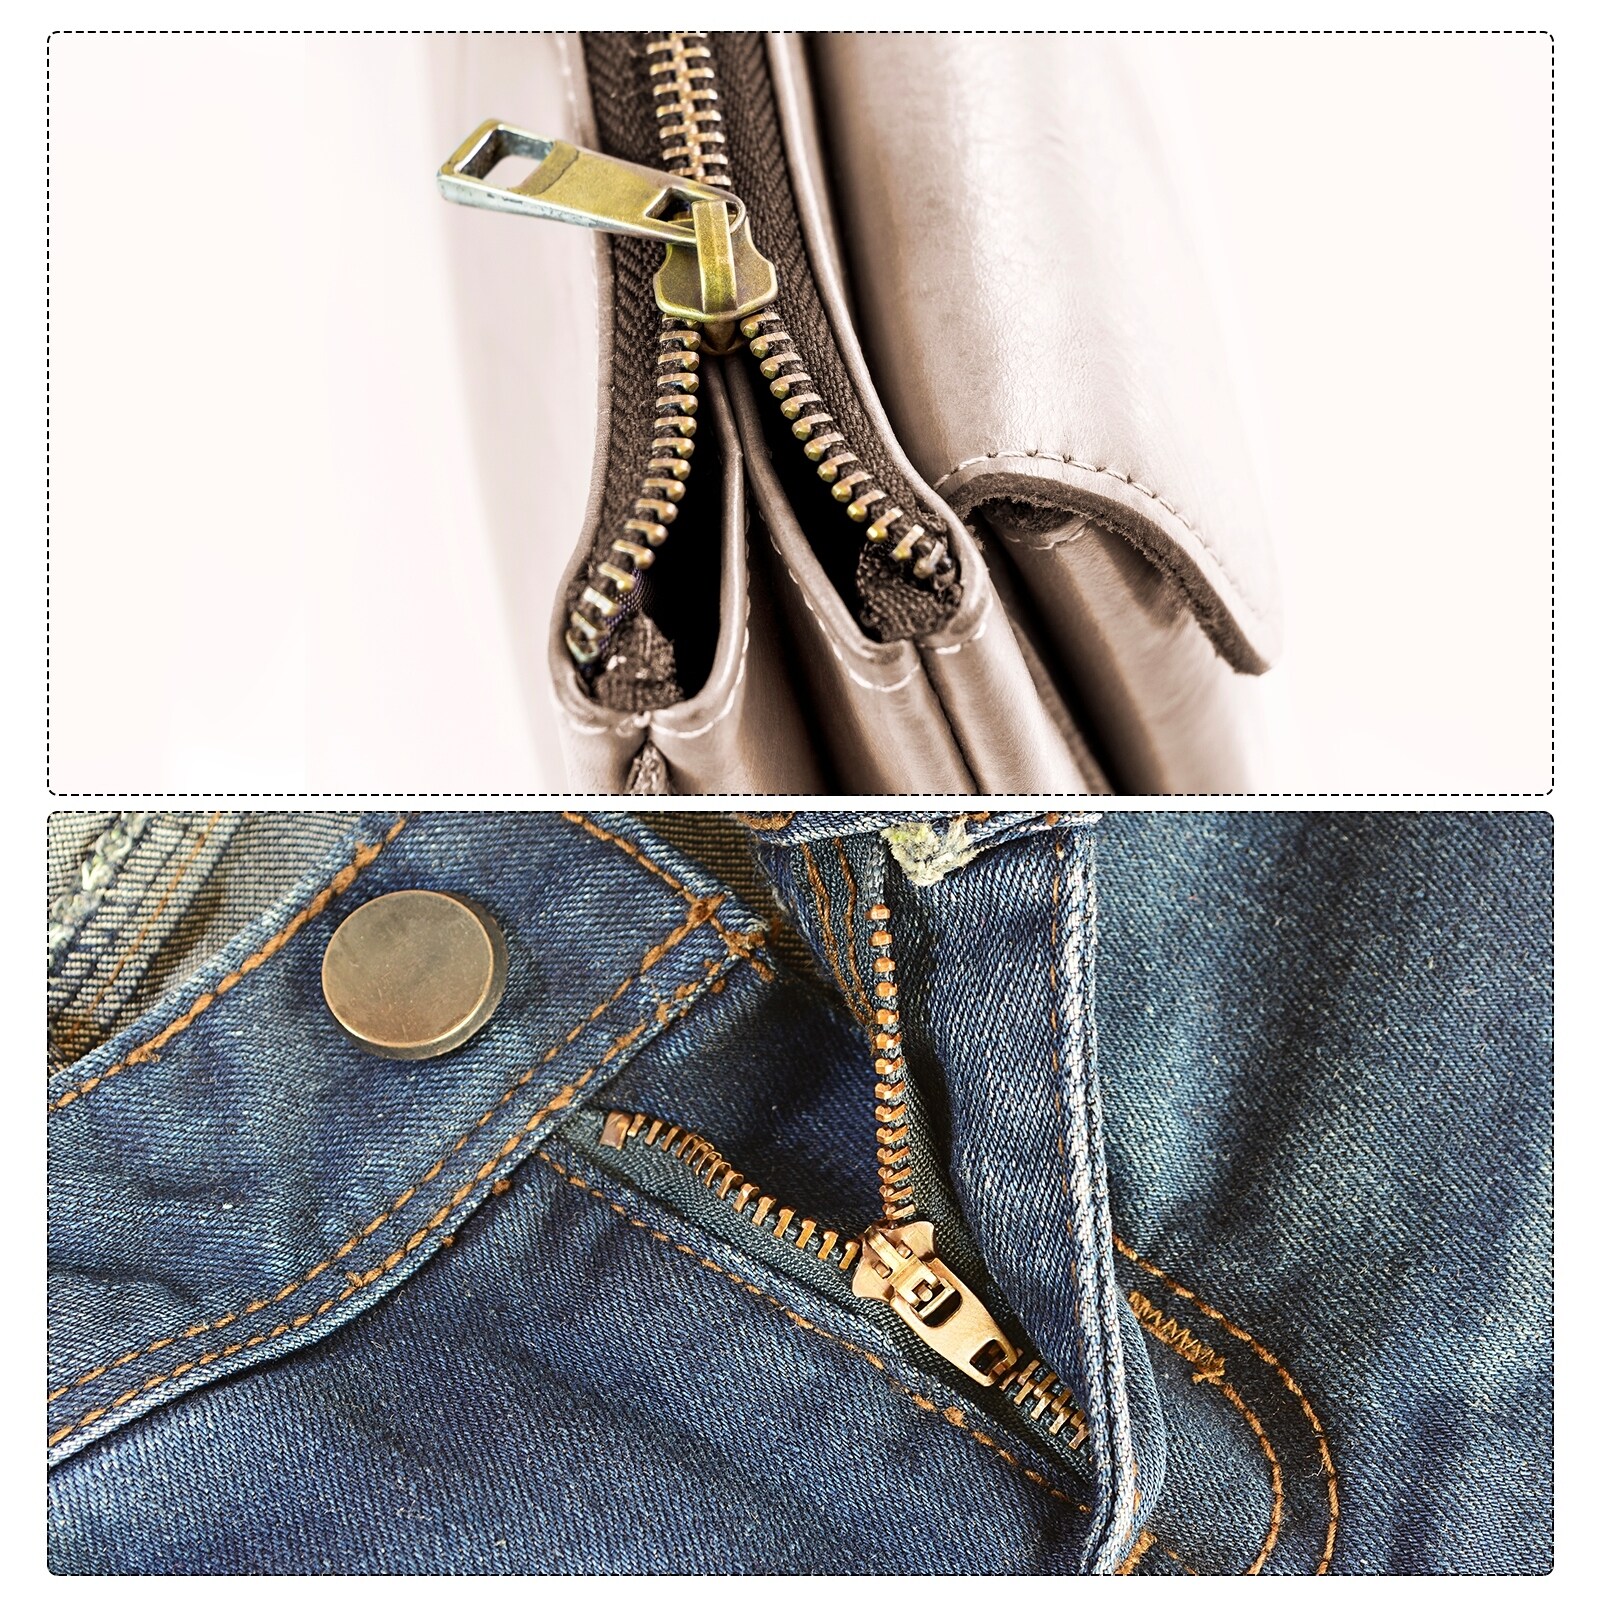 Brass Zipper Slider Retainers, U Shape Top Stop & H Shape Bottom Stops  Zippers Replacement - Bed Bath & Beyond - 37241315